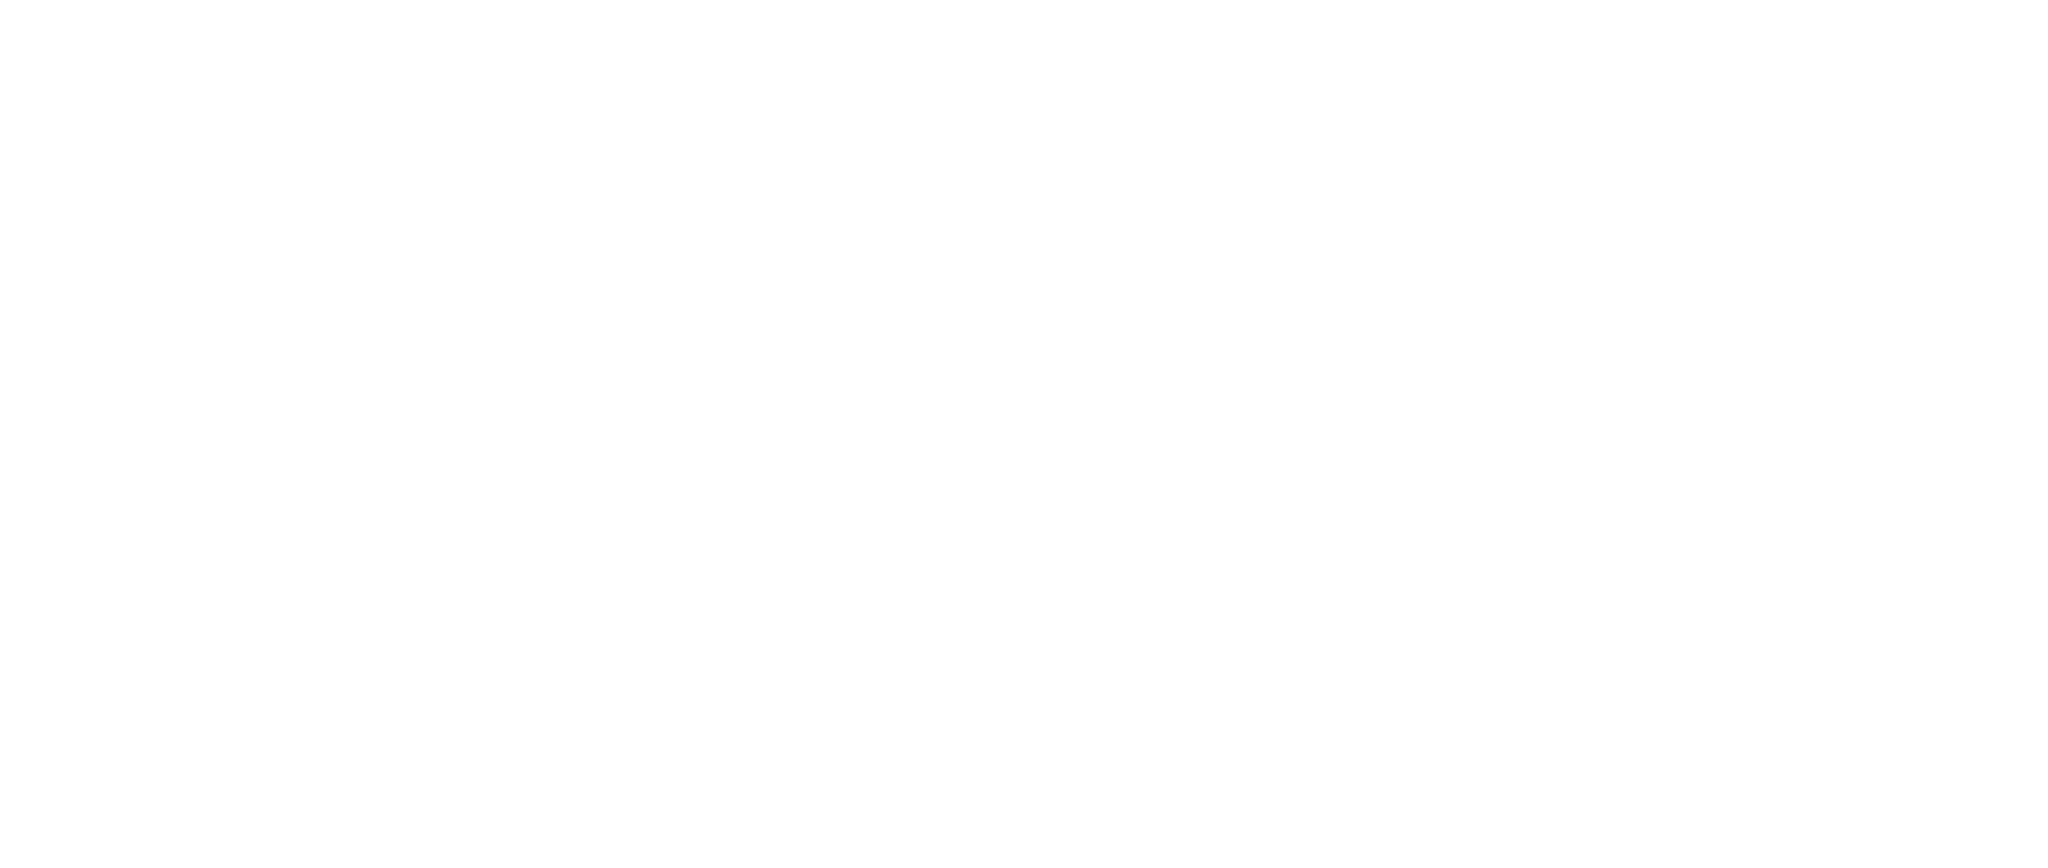 Coiffeur Saleh Logo